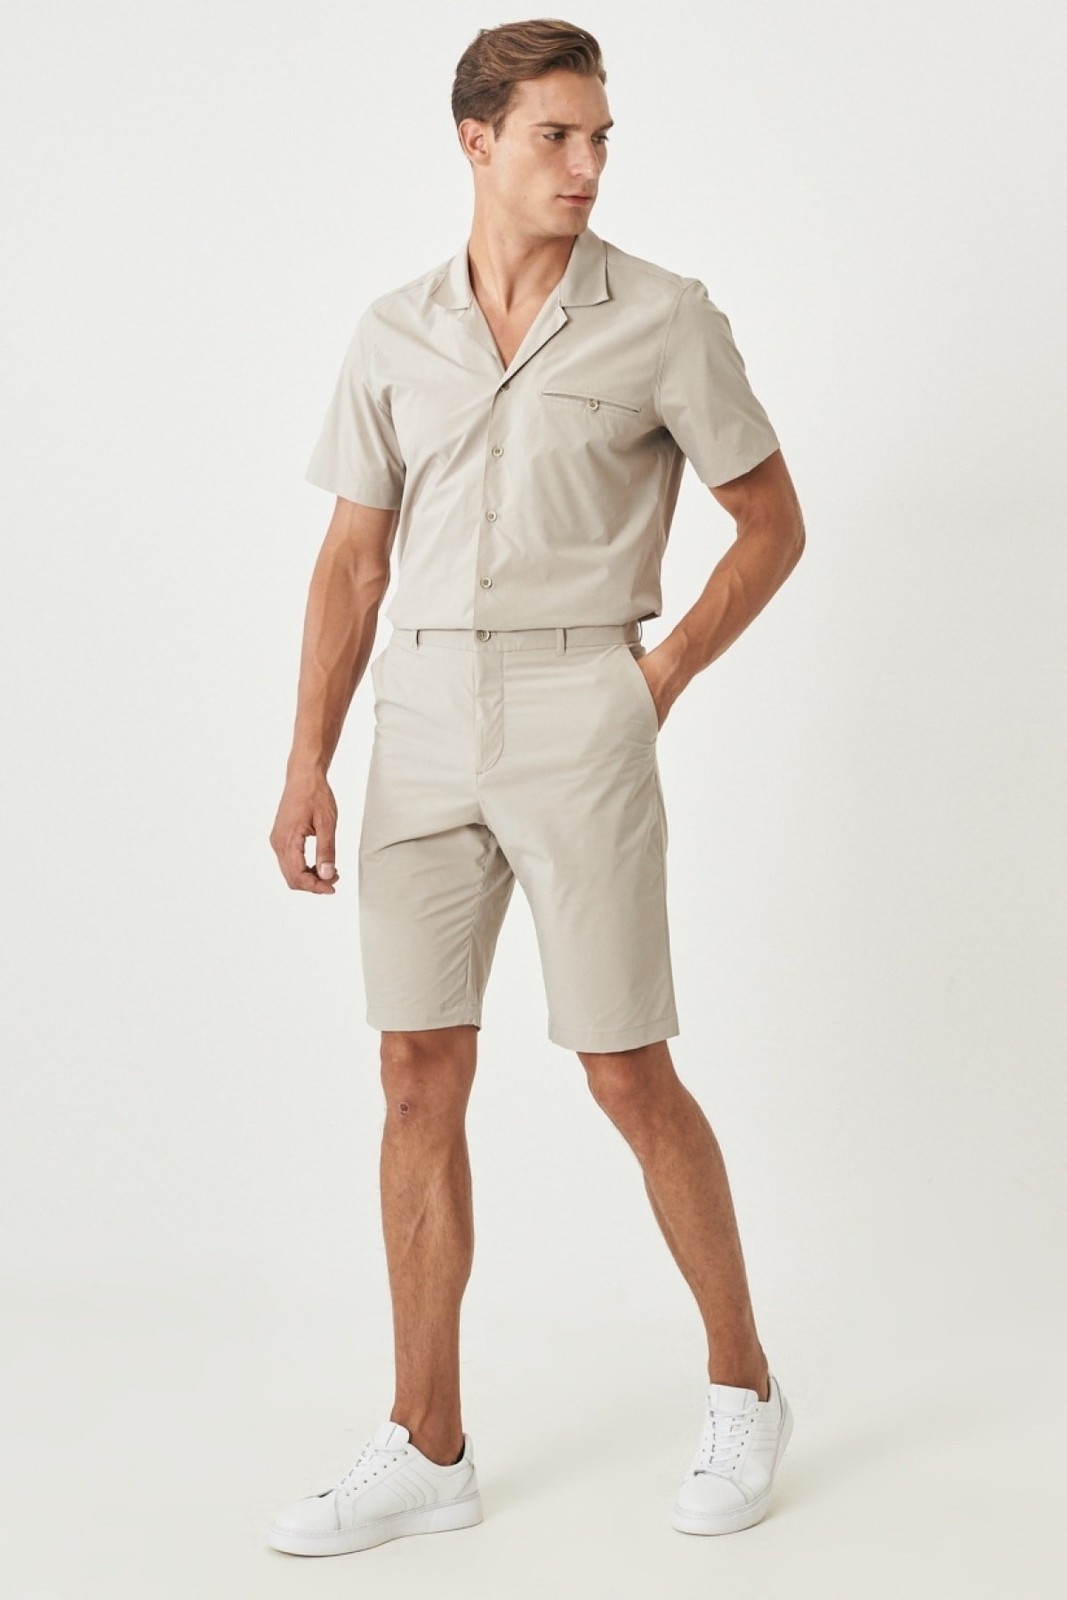 ALTINYILDIZ CLASSICS Men's Beige Slim Fit Narrow Cut Casual Shorts with Side Pockets